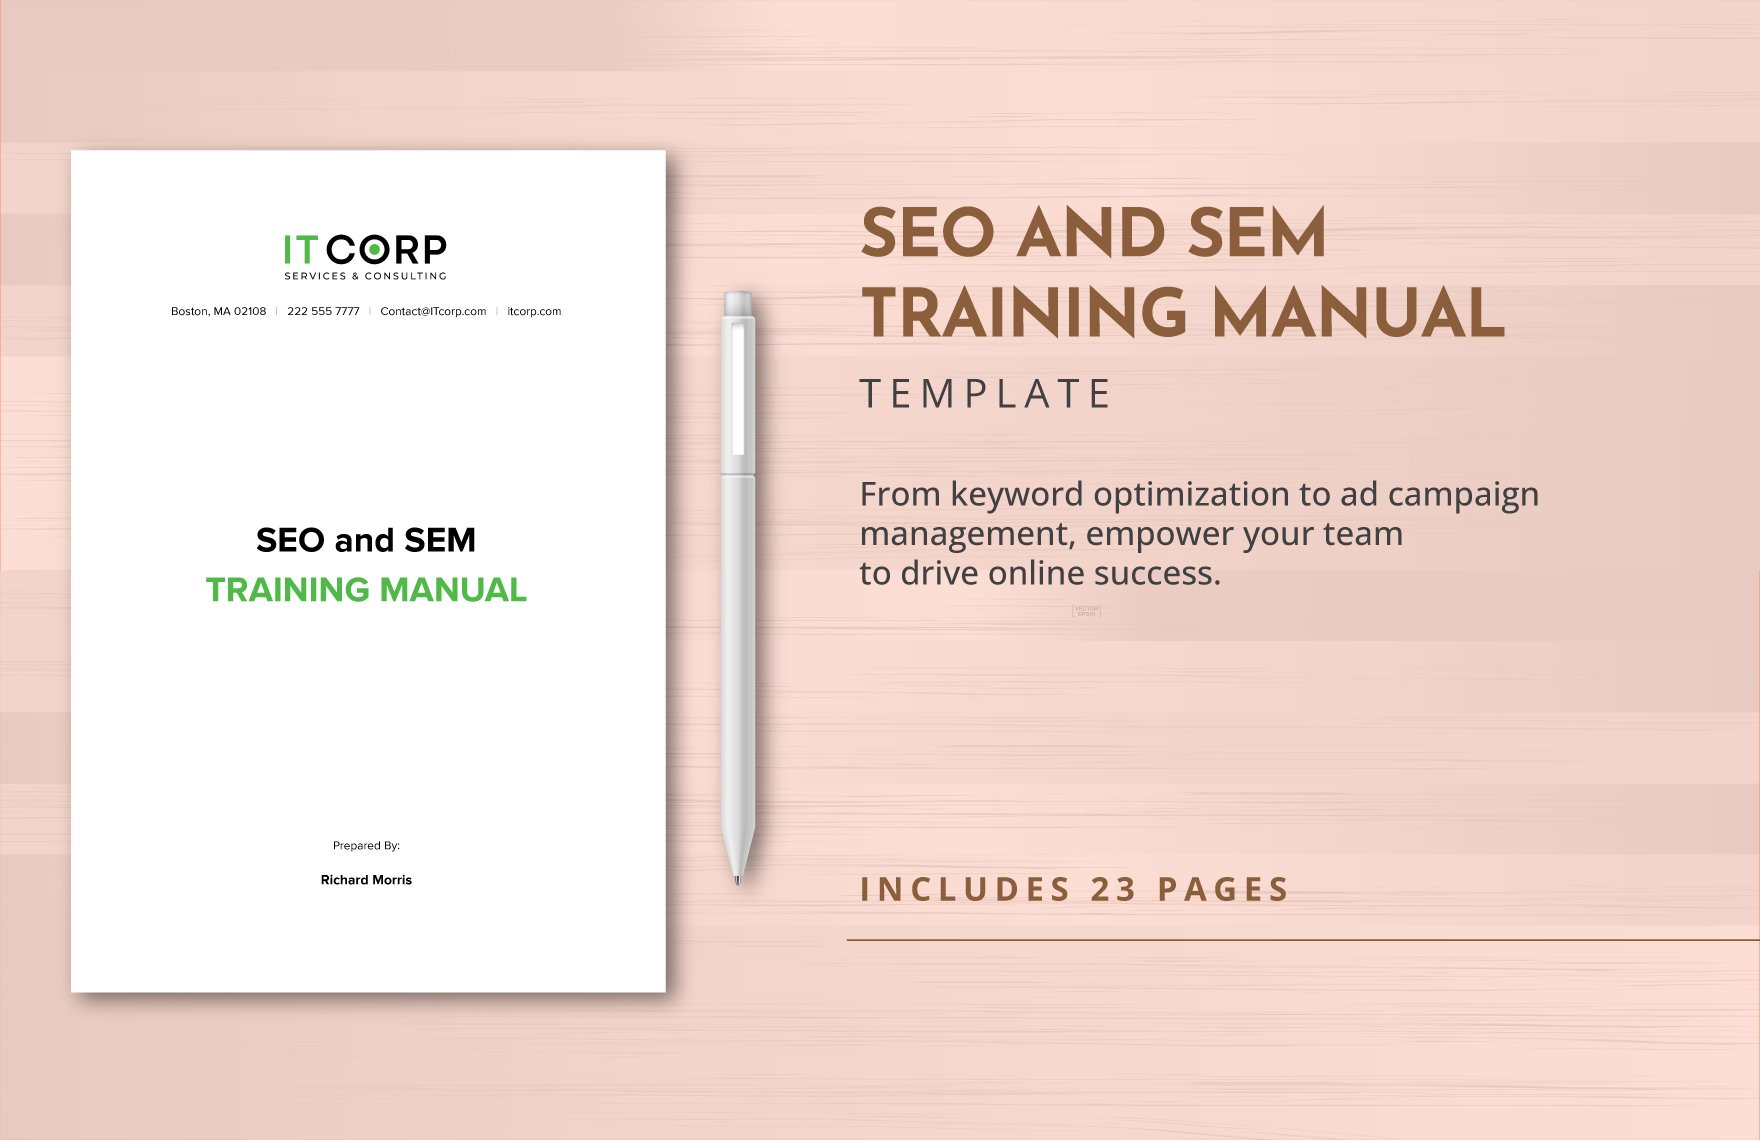 SEO and SEM Training Manual Template